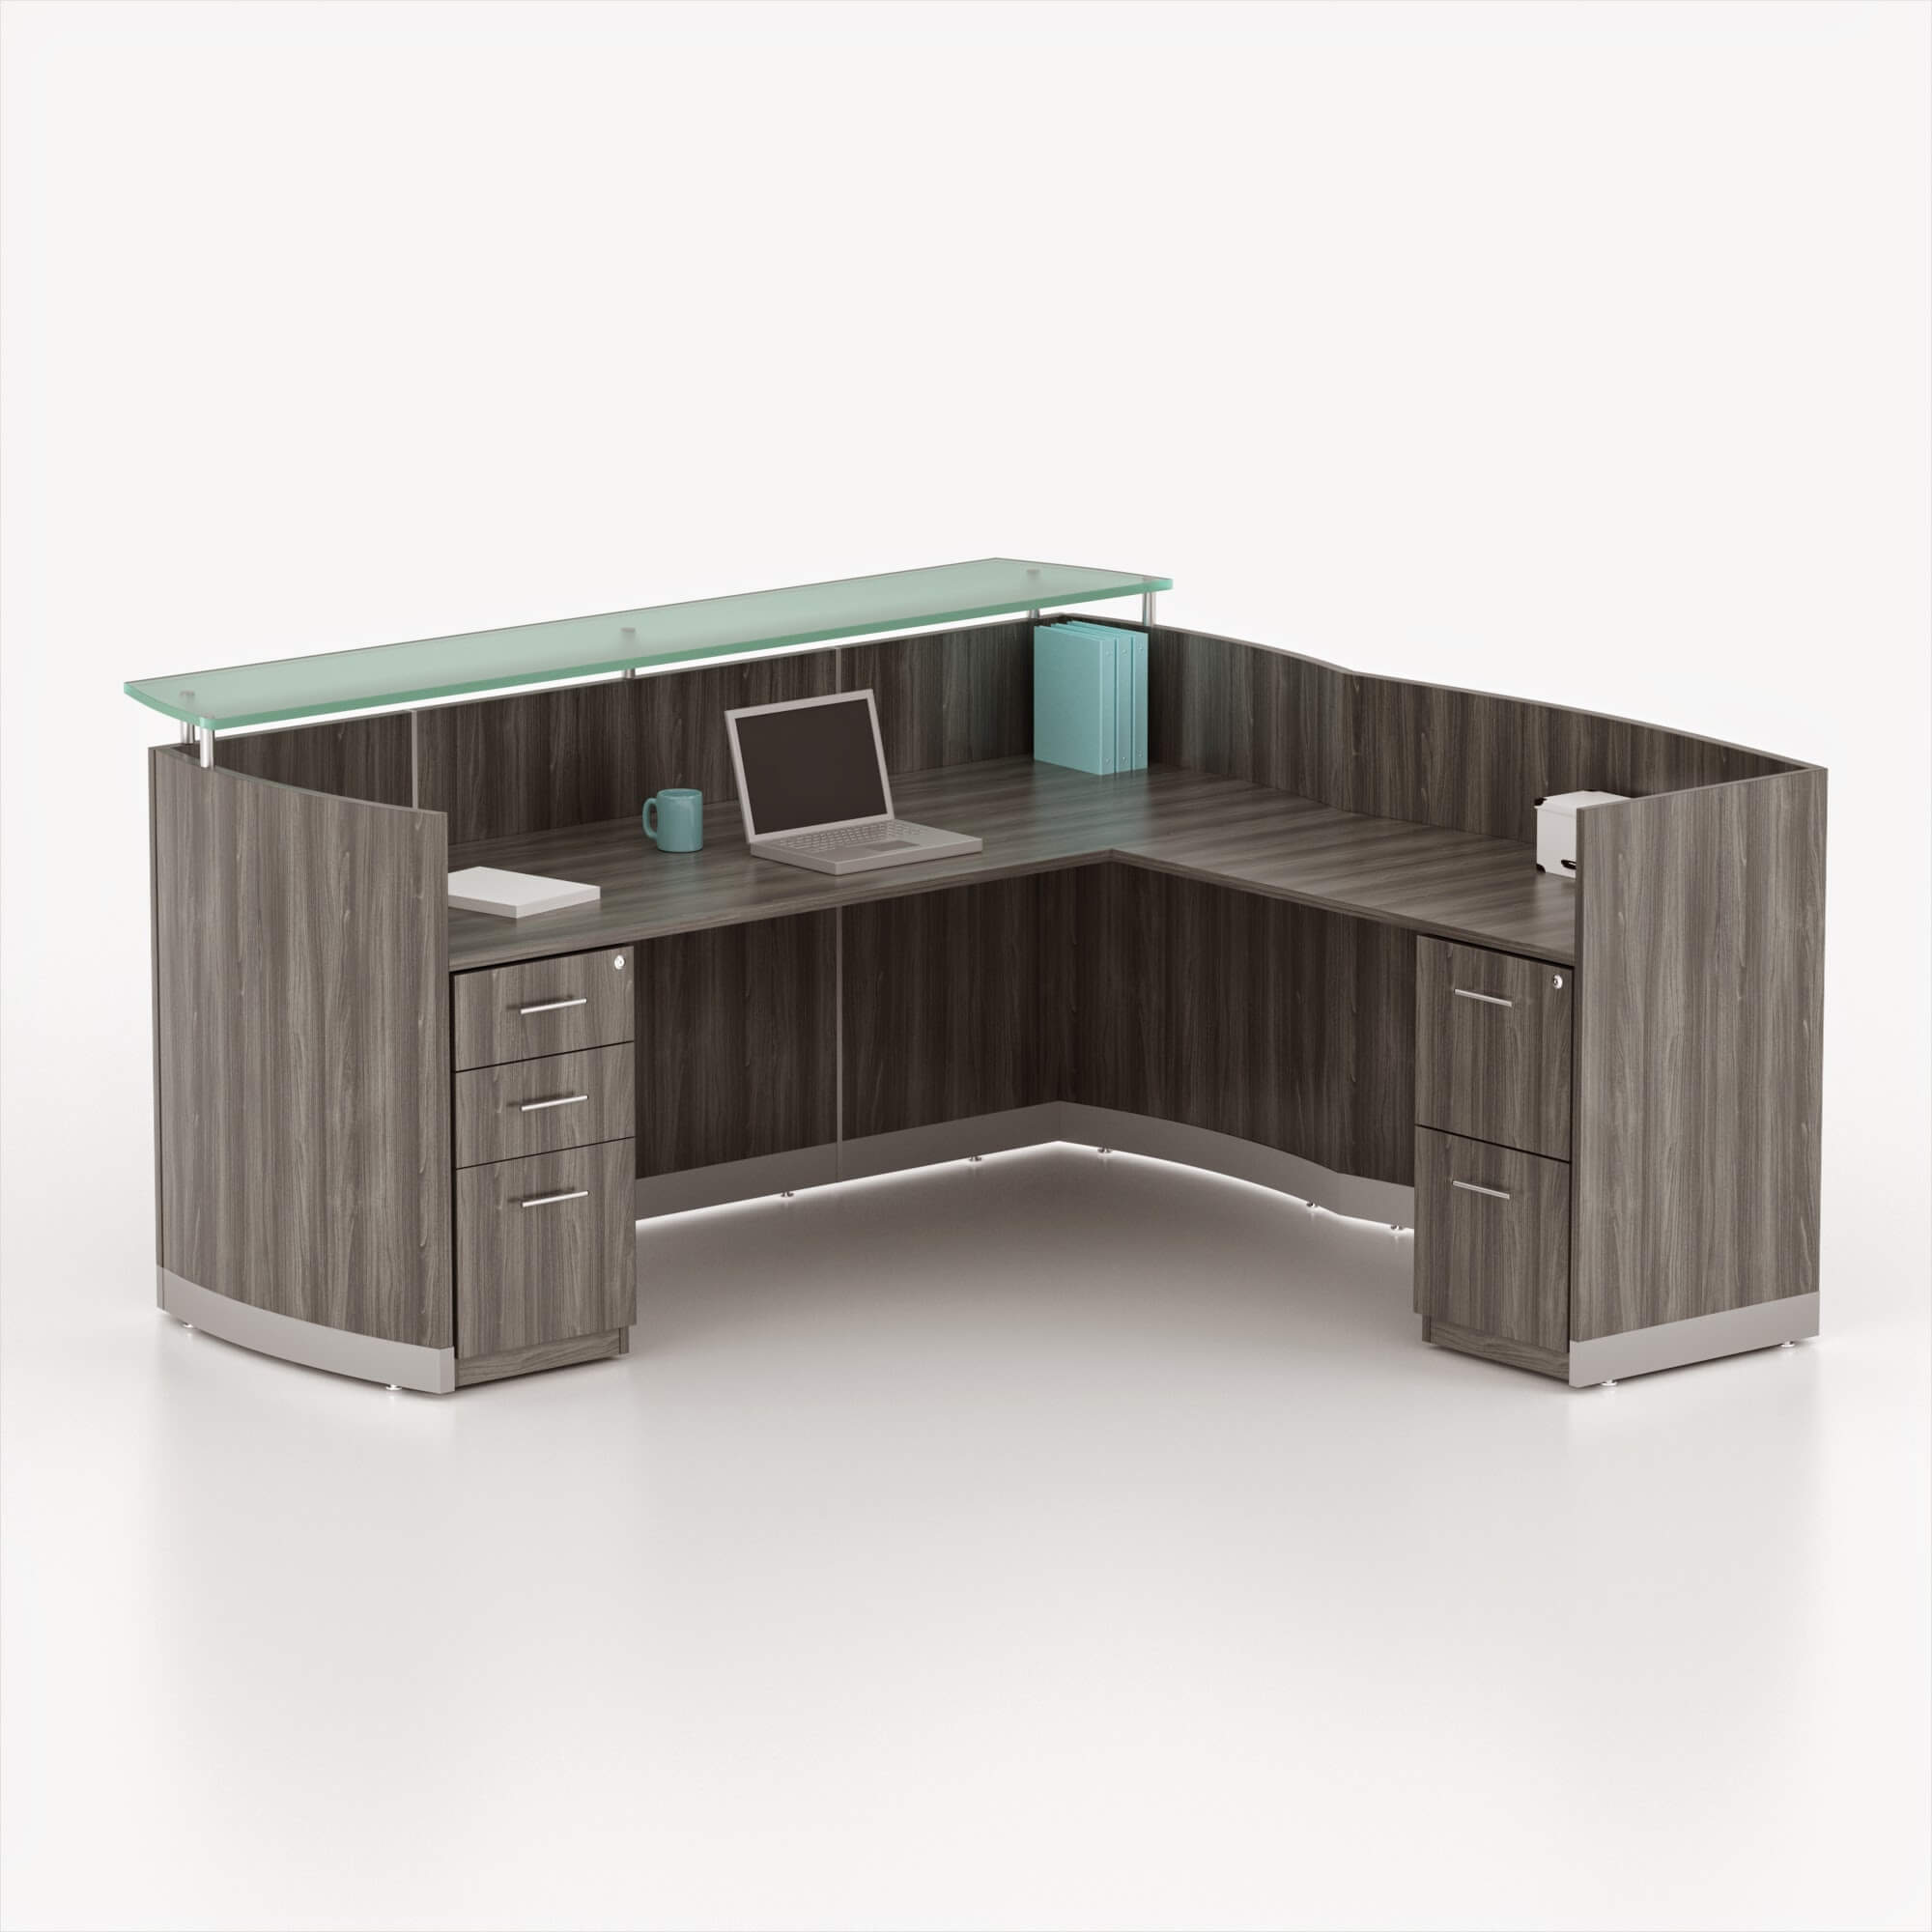 L shaped reeption desk CUB MNRSLBB GRA MAY